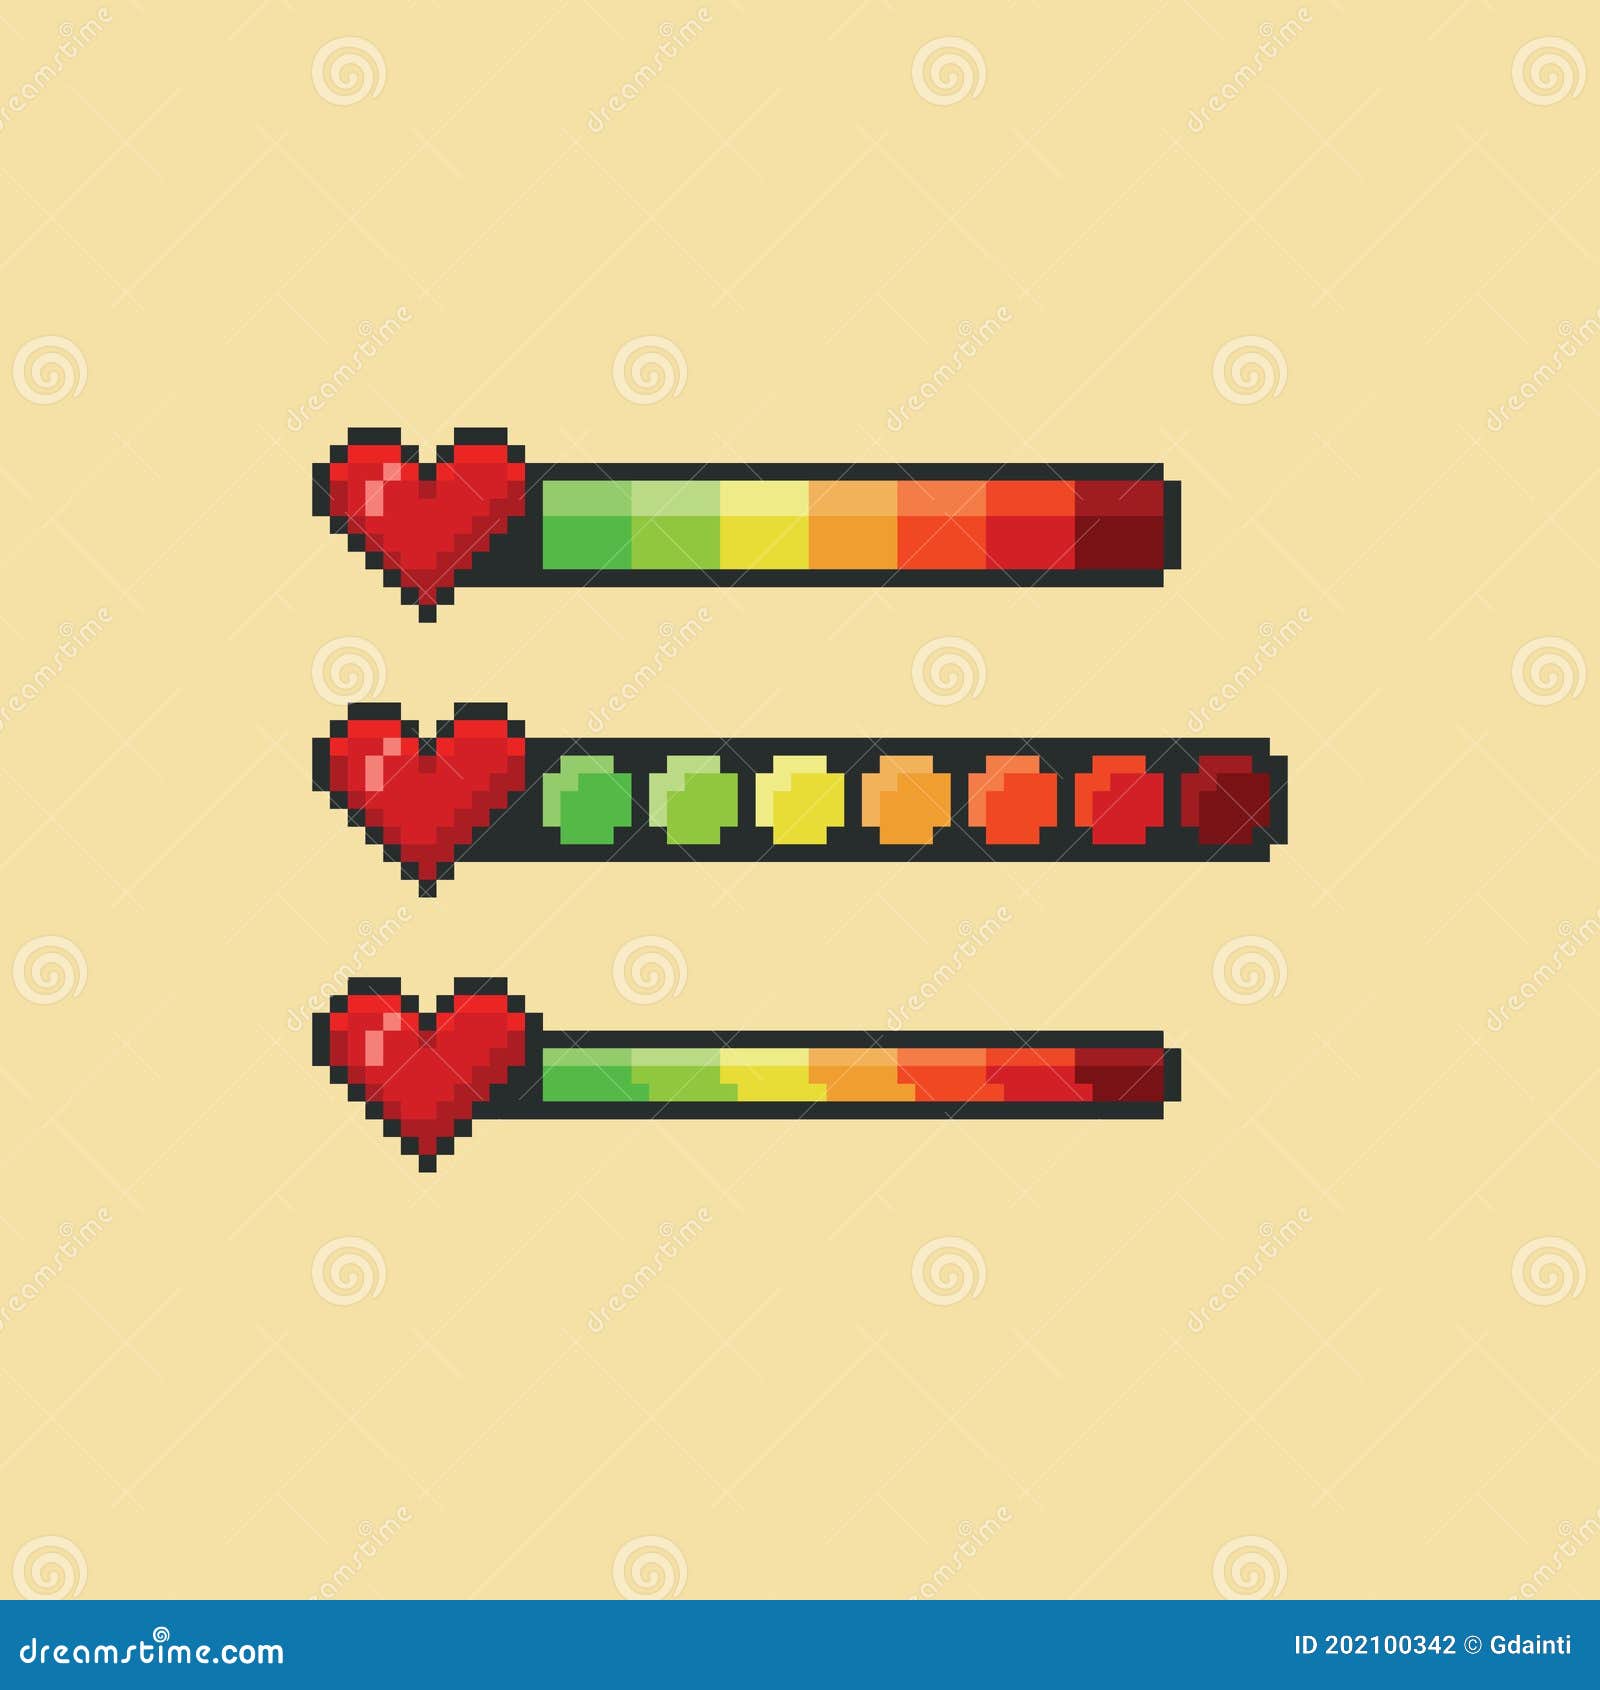 Pixel Art Vector Illustration Set - Red Heart and Health Bar Color  Indicator, 8 Bit Game Design Hud Graphic Sprite Stock Vector - Illustration  of gaming, style: 202100342